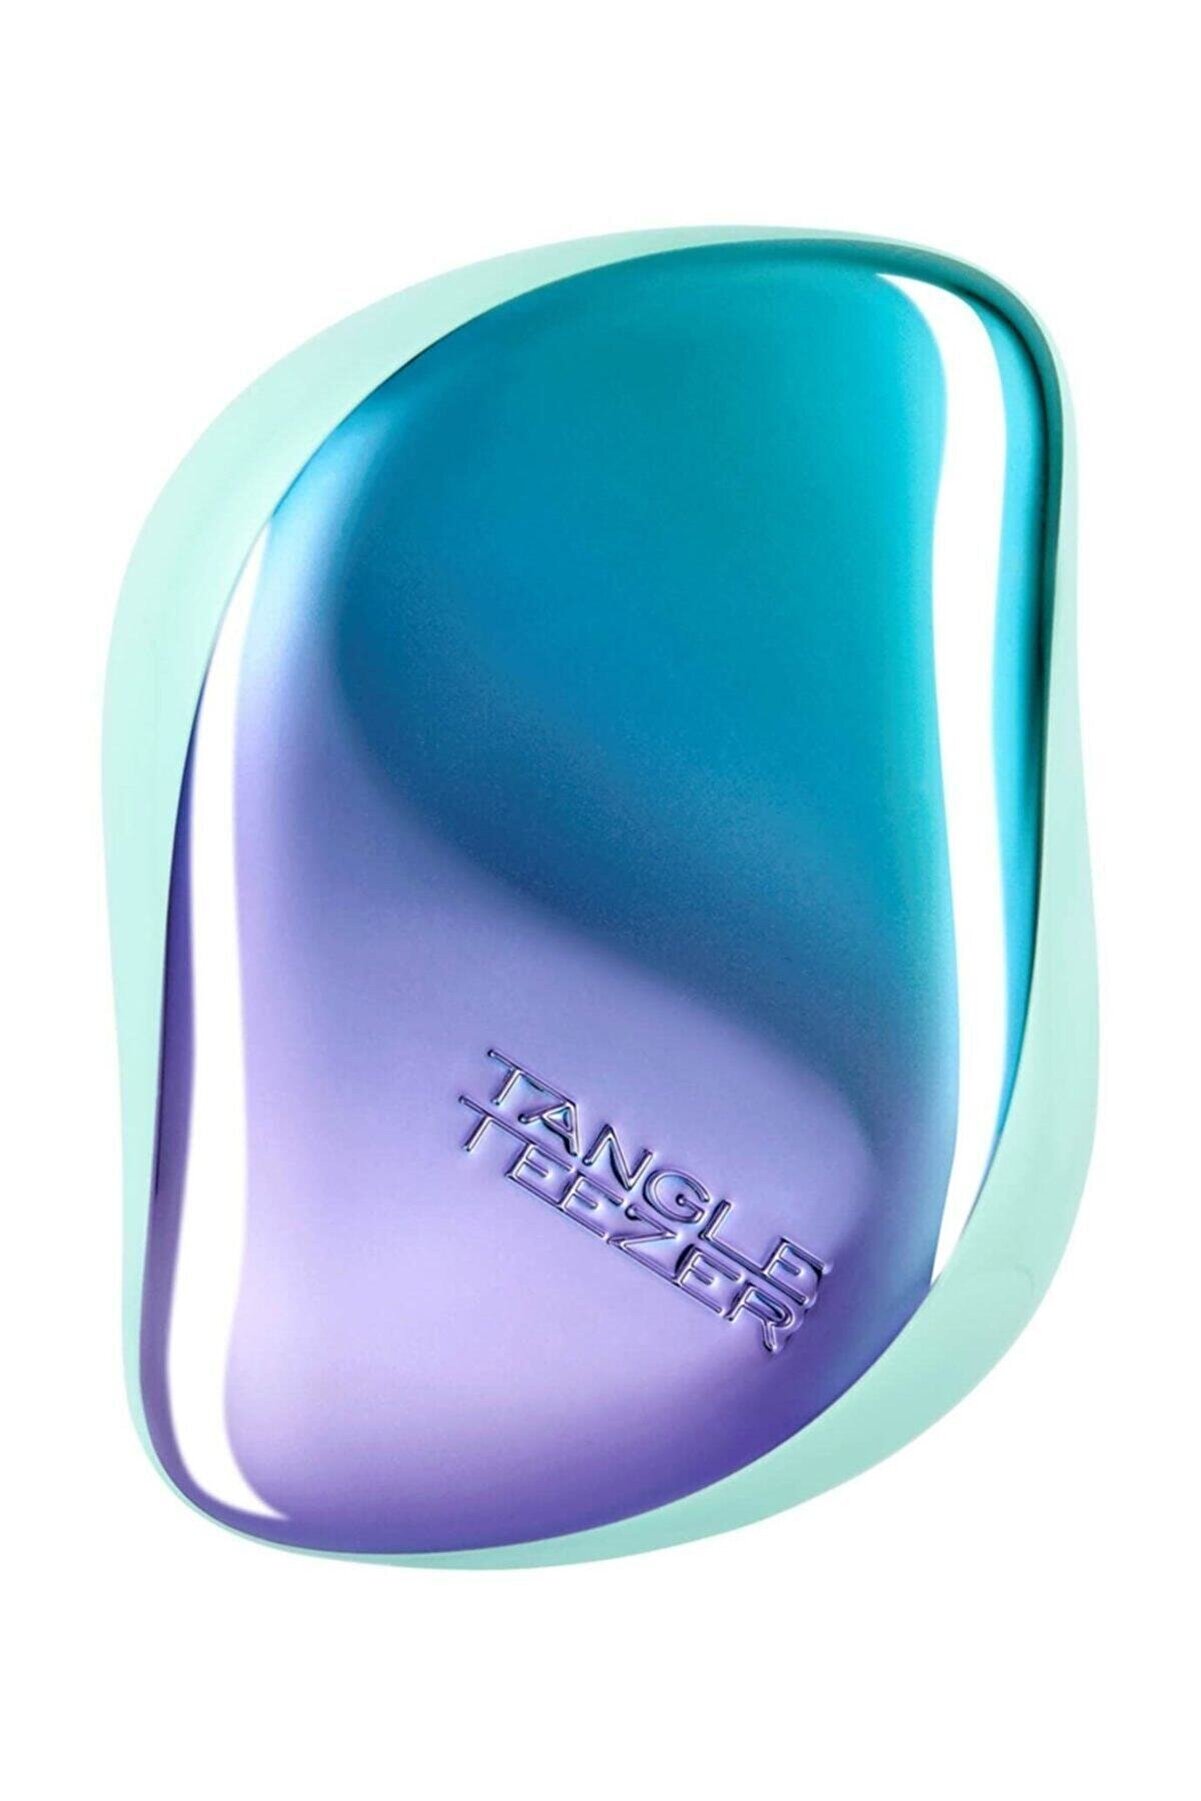 Tangle Teezer Compact Petrol Blue Ombre